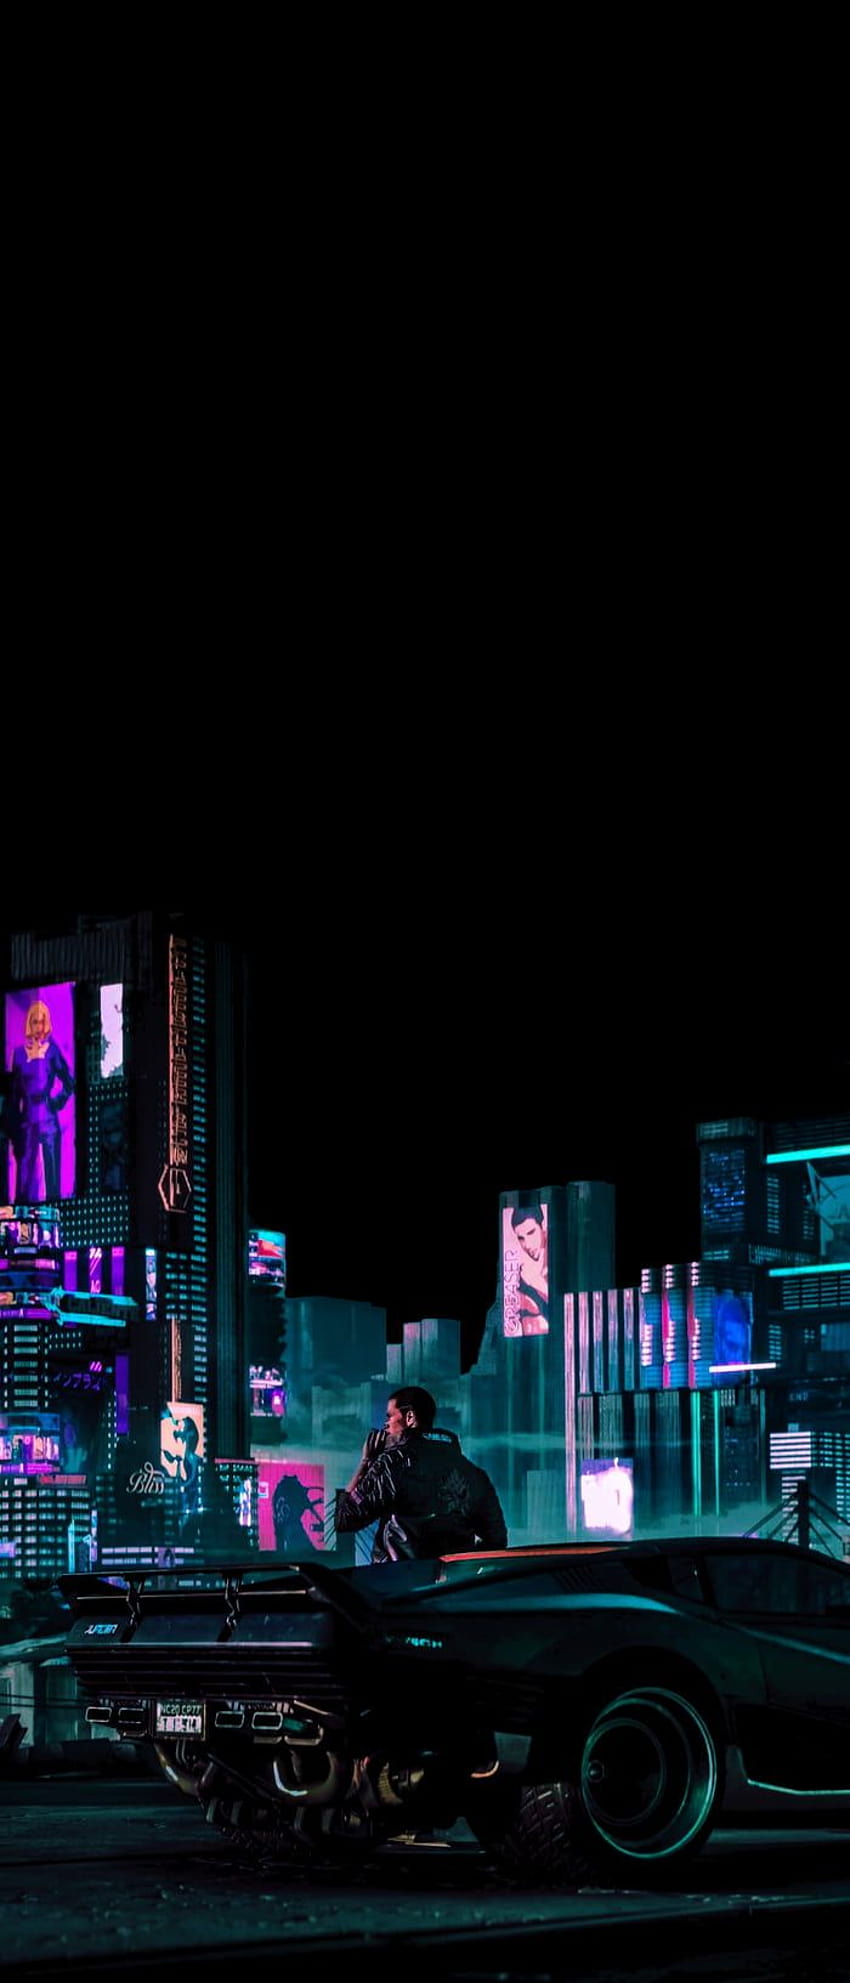 Download Futuristic Night City Cyberpunk 2077 Iphone Wallpaper  Wallpapers com